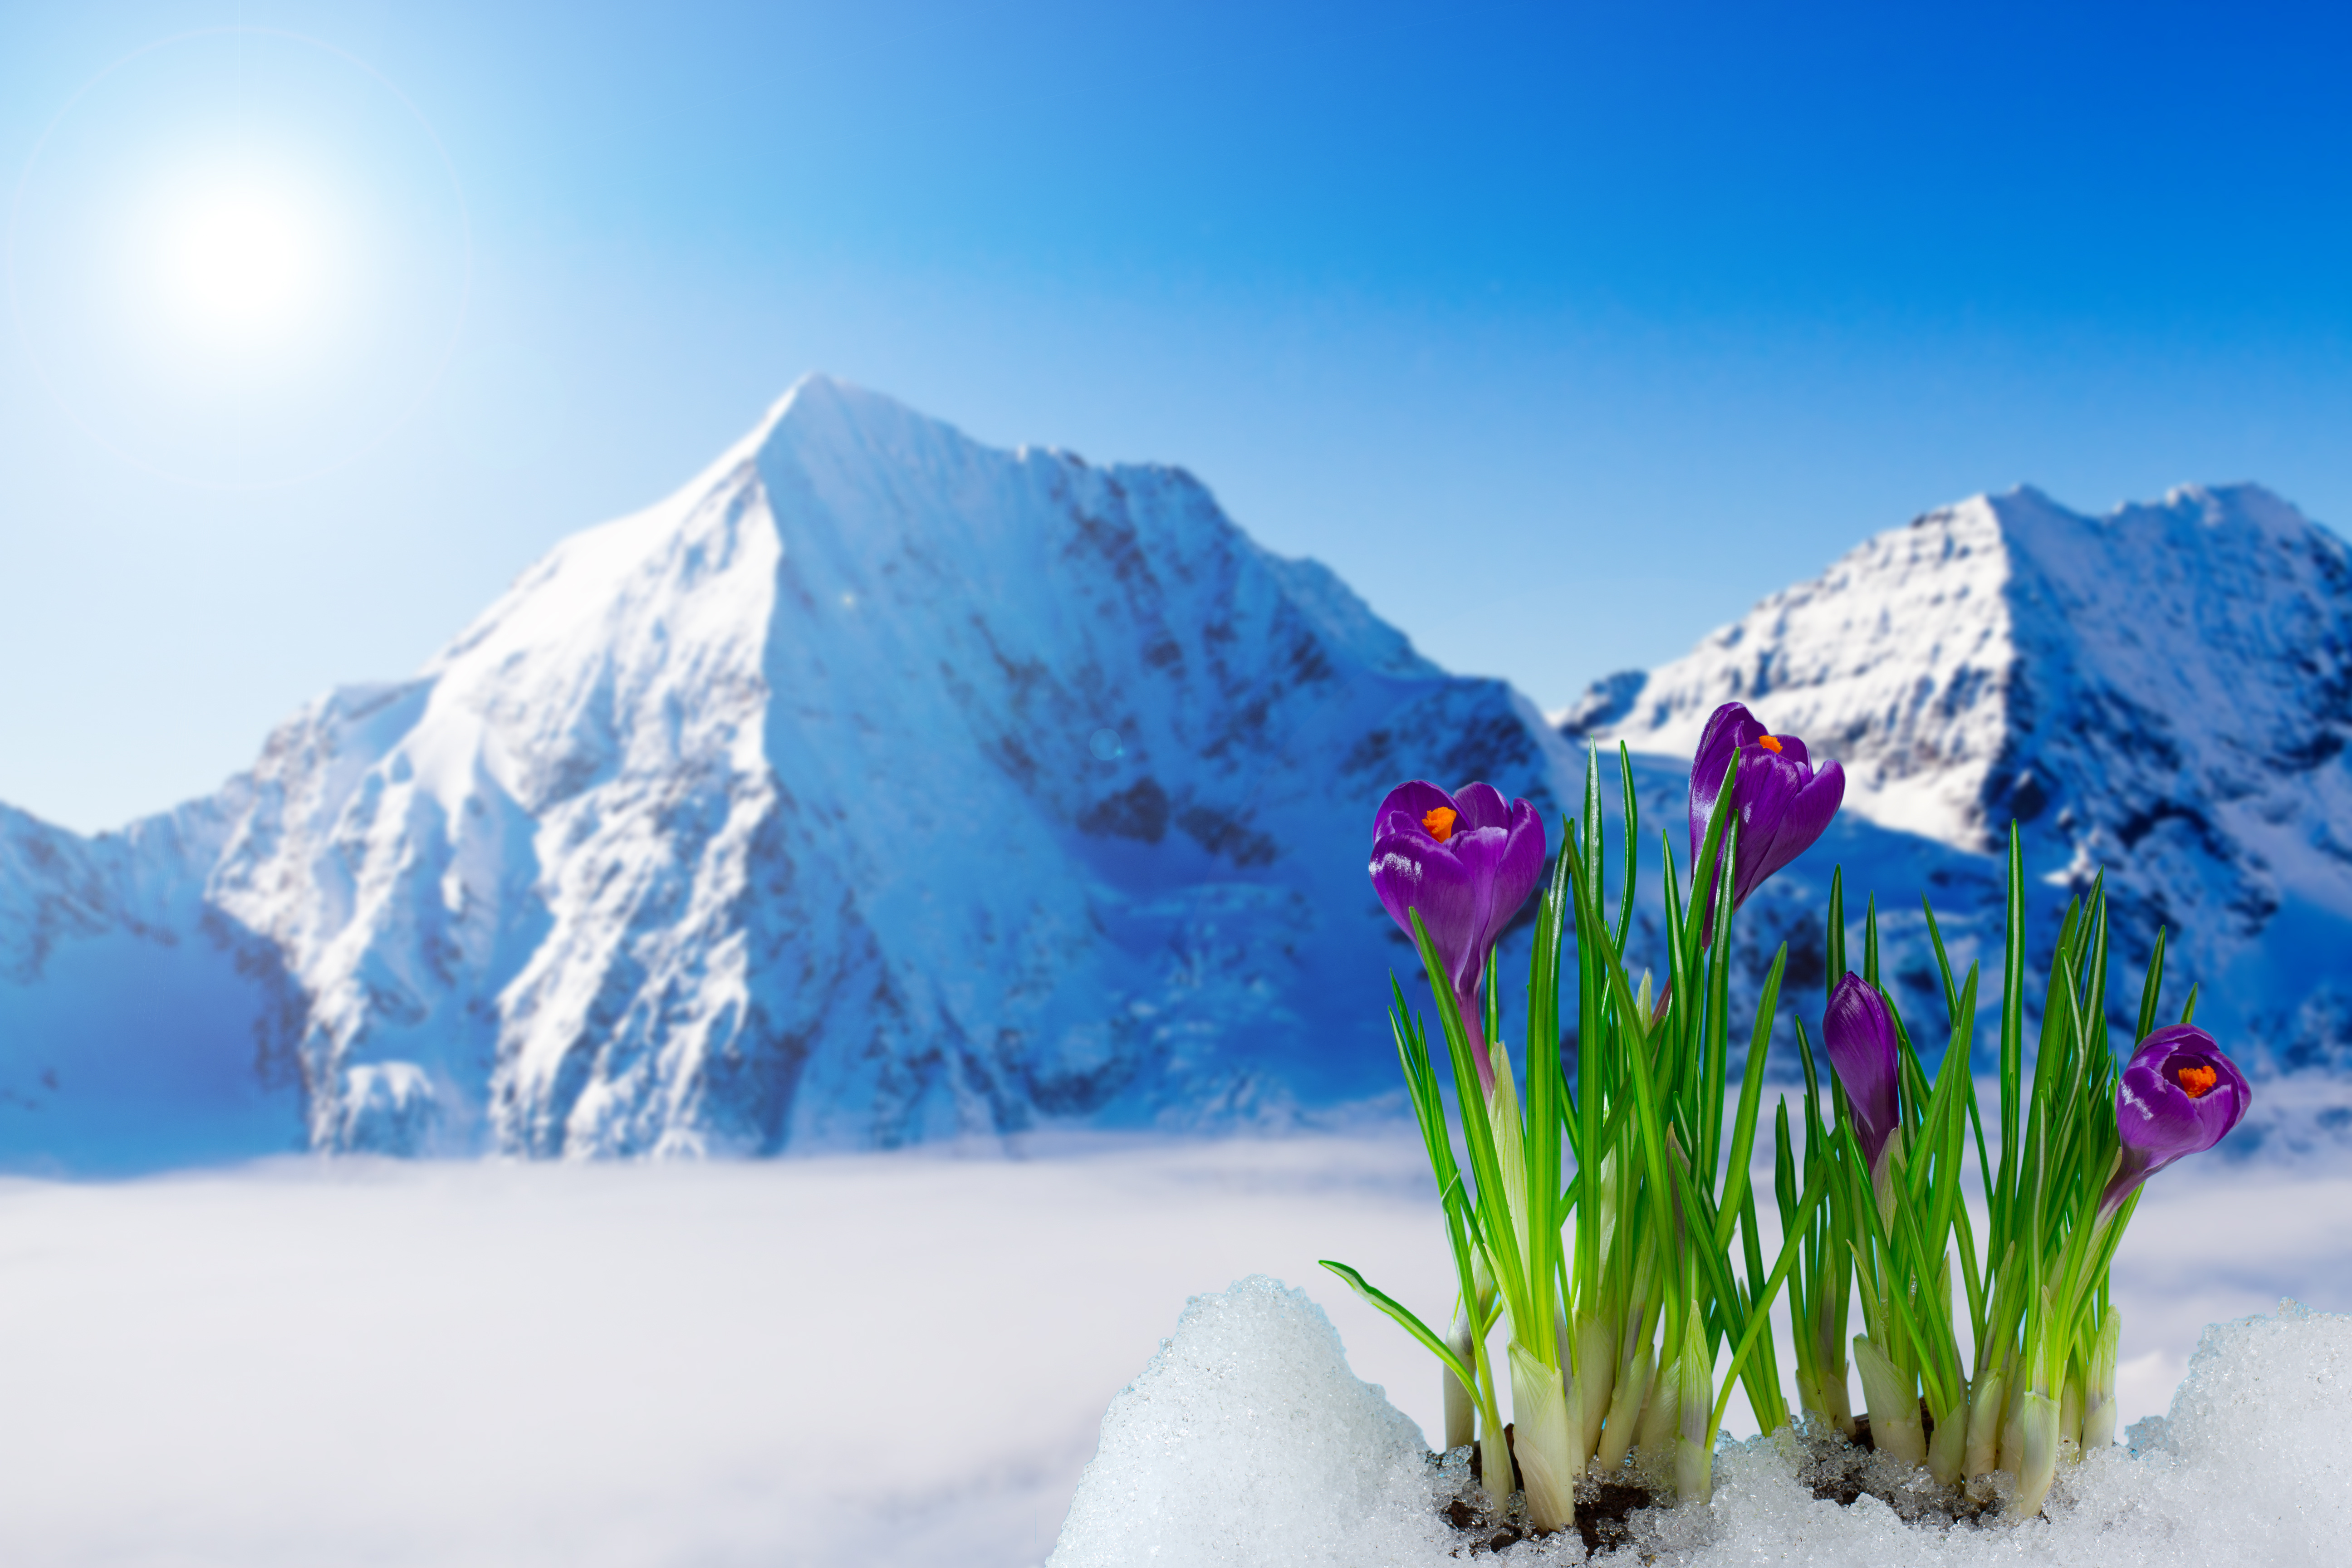 February first. Крокус горный цветок Эльбрус. Крокусы на Эльбрусе. Цветы в снегу.